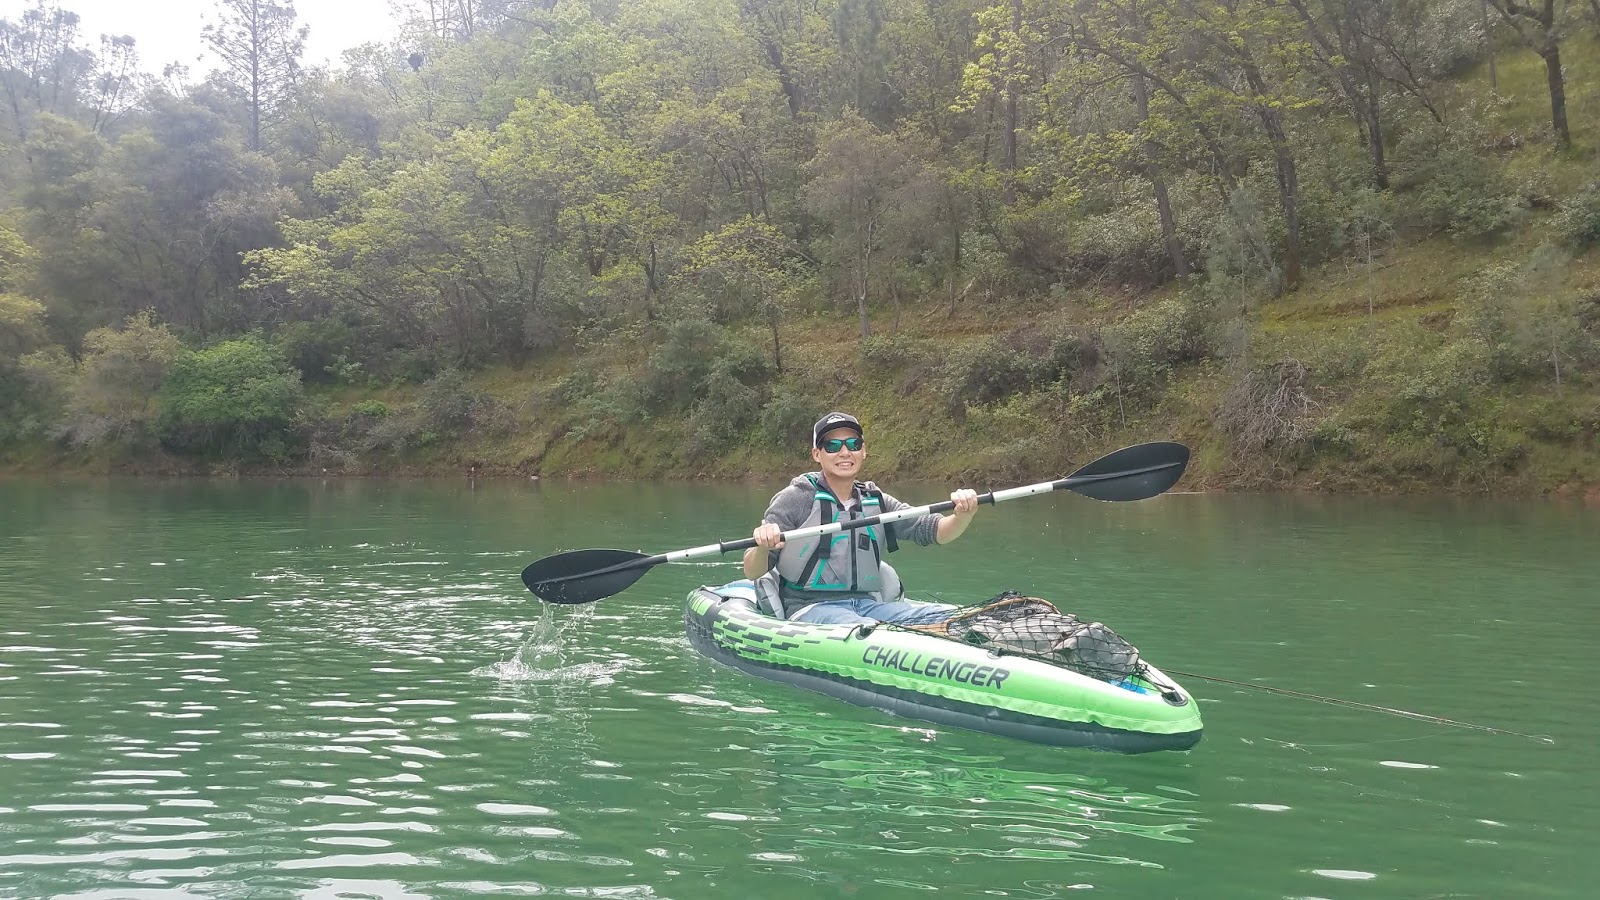 keep calm and fly fish: kayaking lake englebright